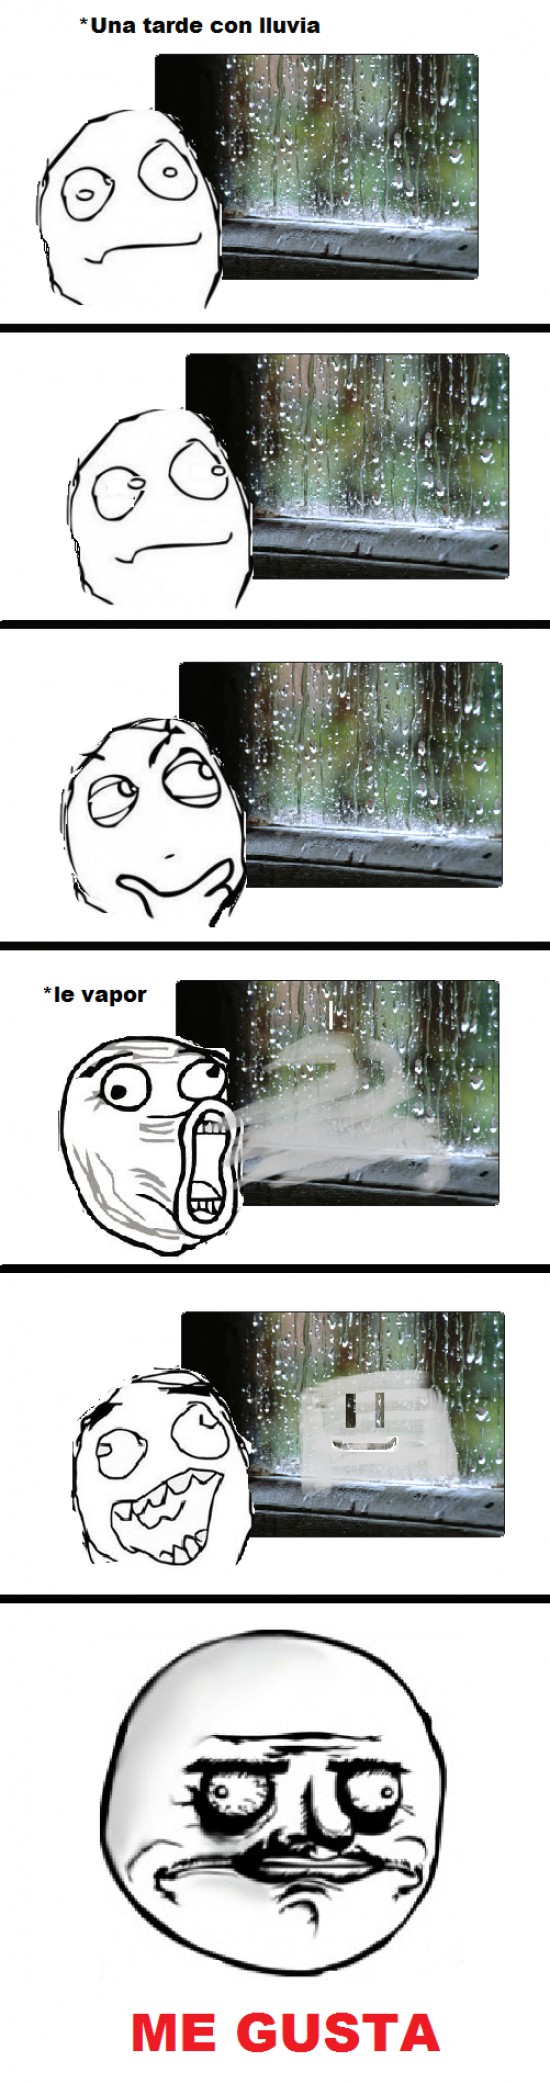 lluvia,me gusta,vapor,ventana